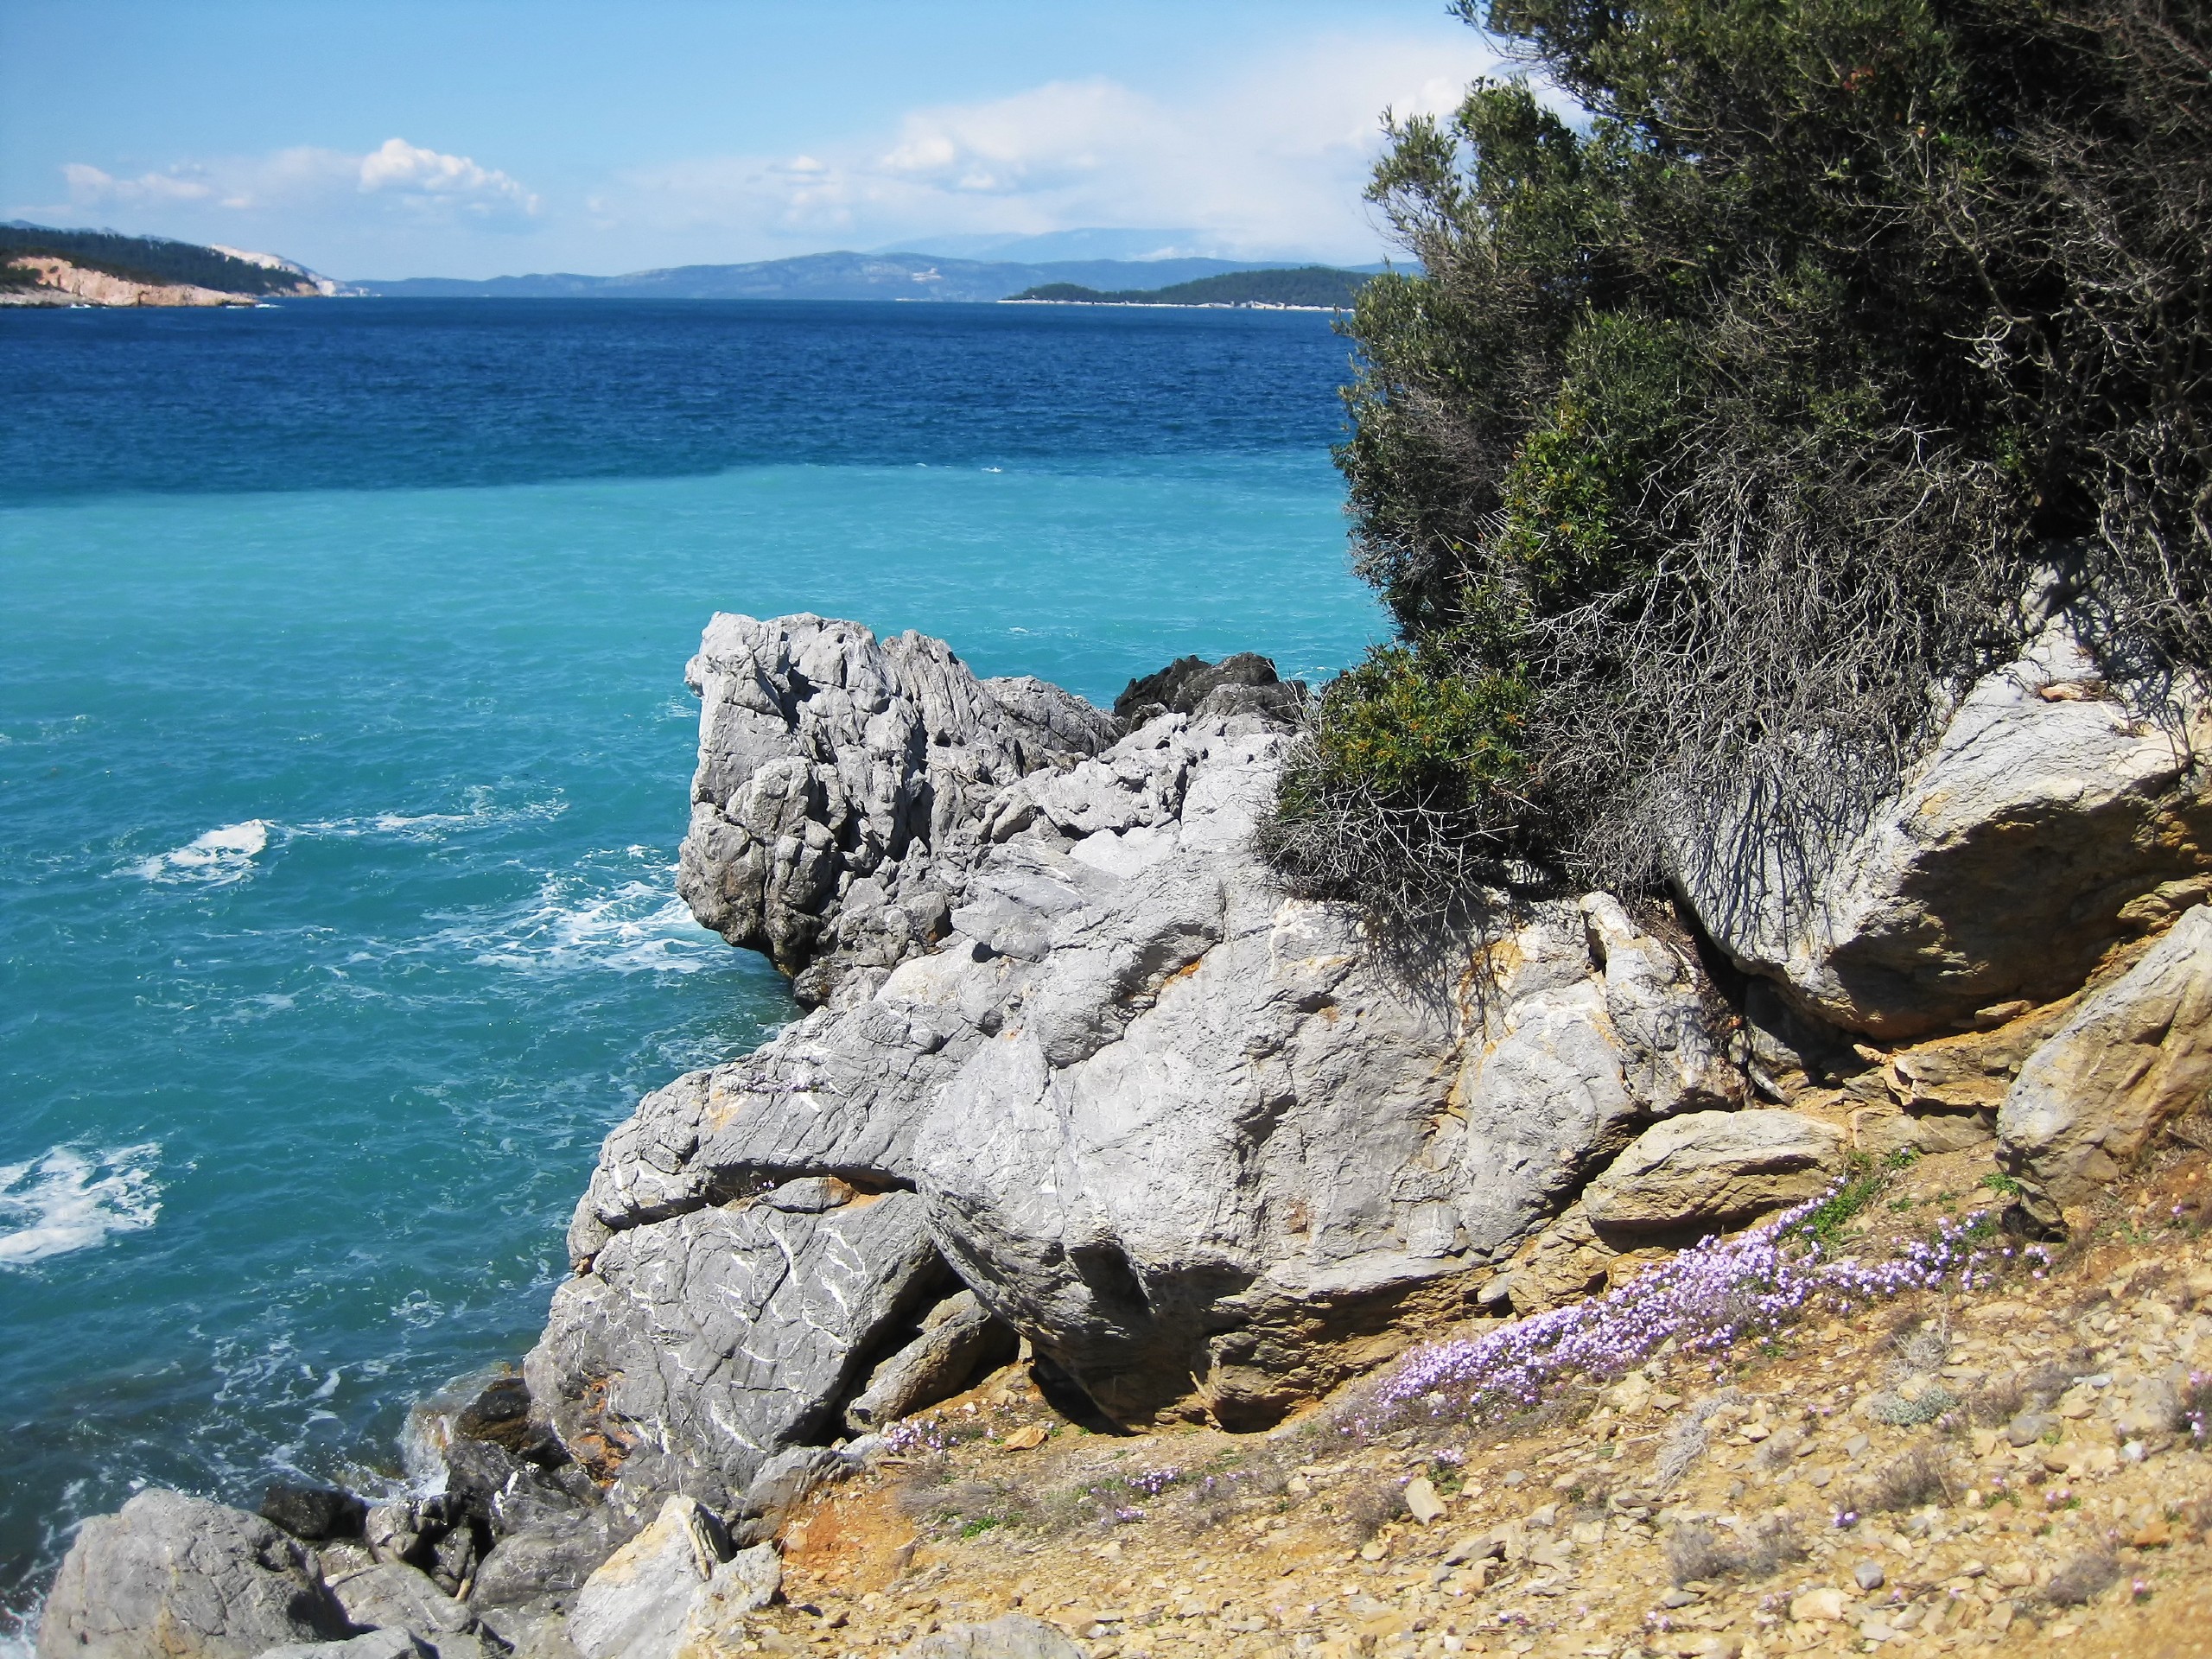 Rocky shores of Evia Island (Aegean Sea, Greece)